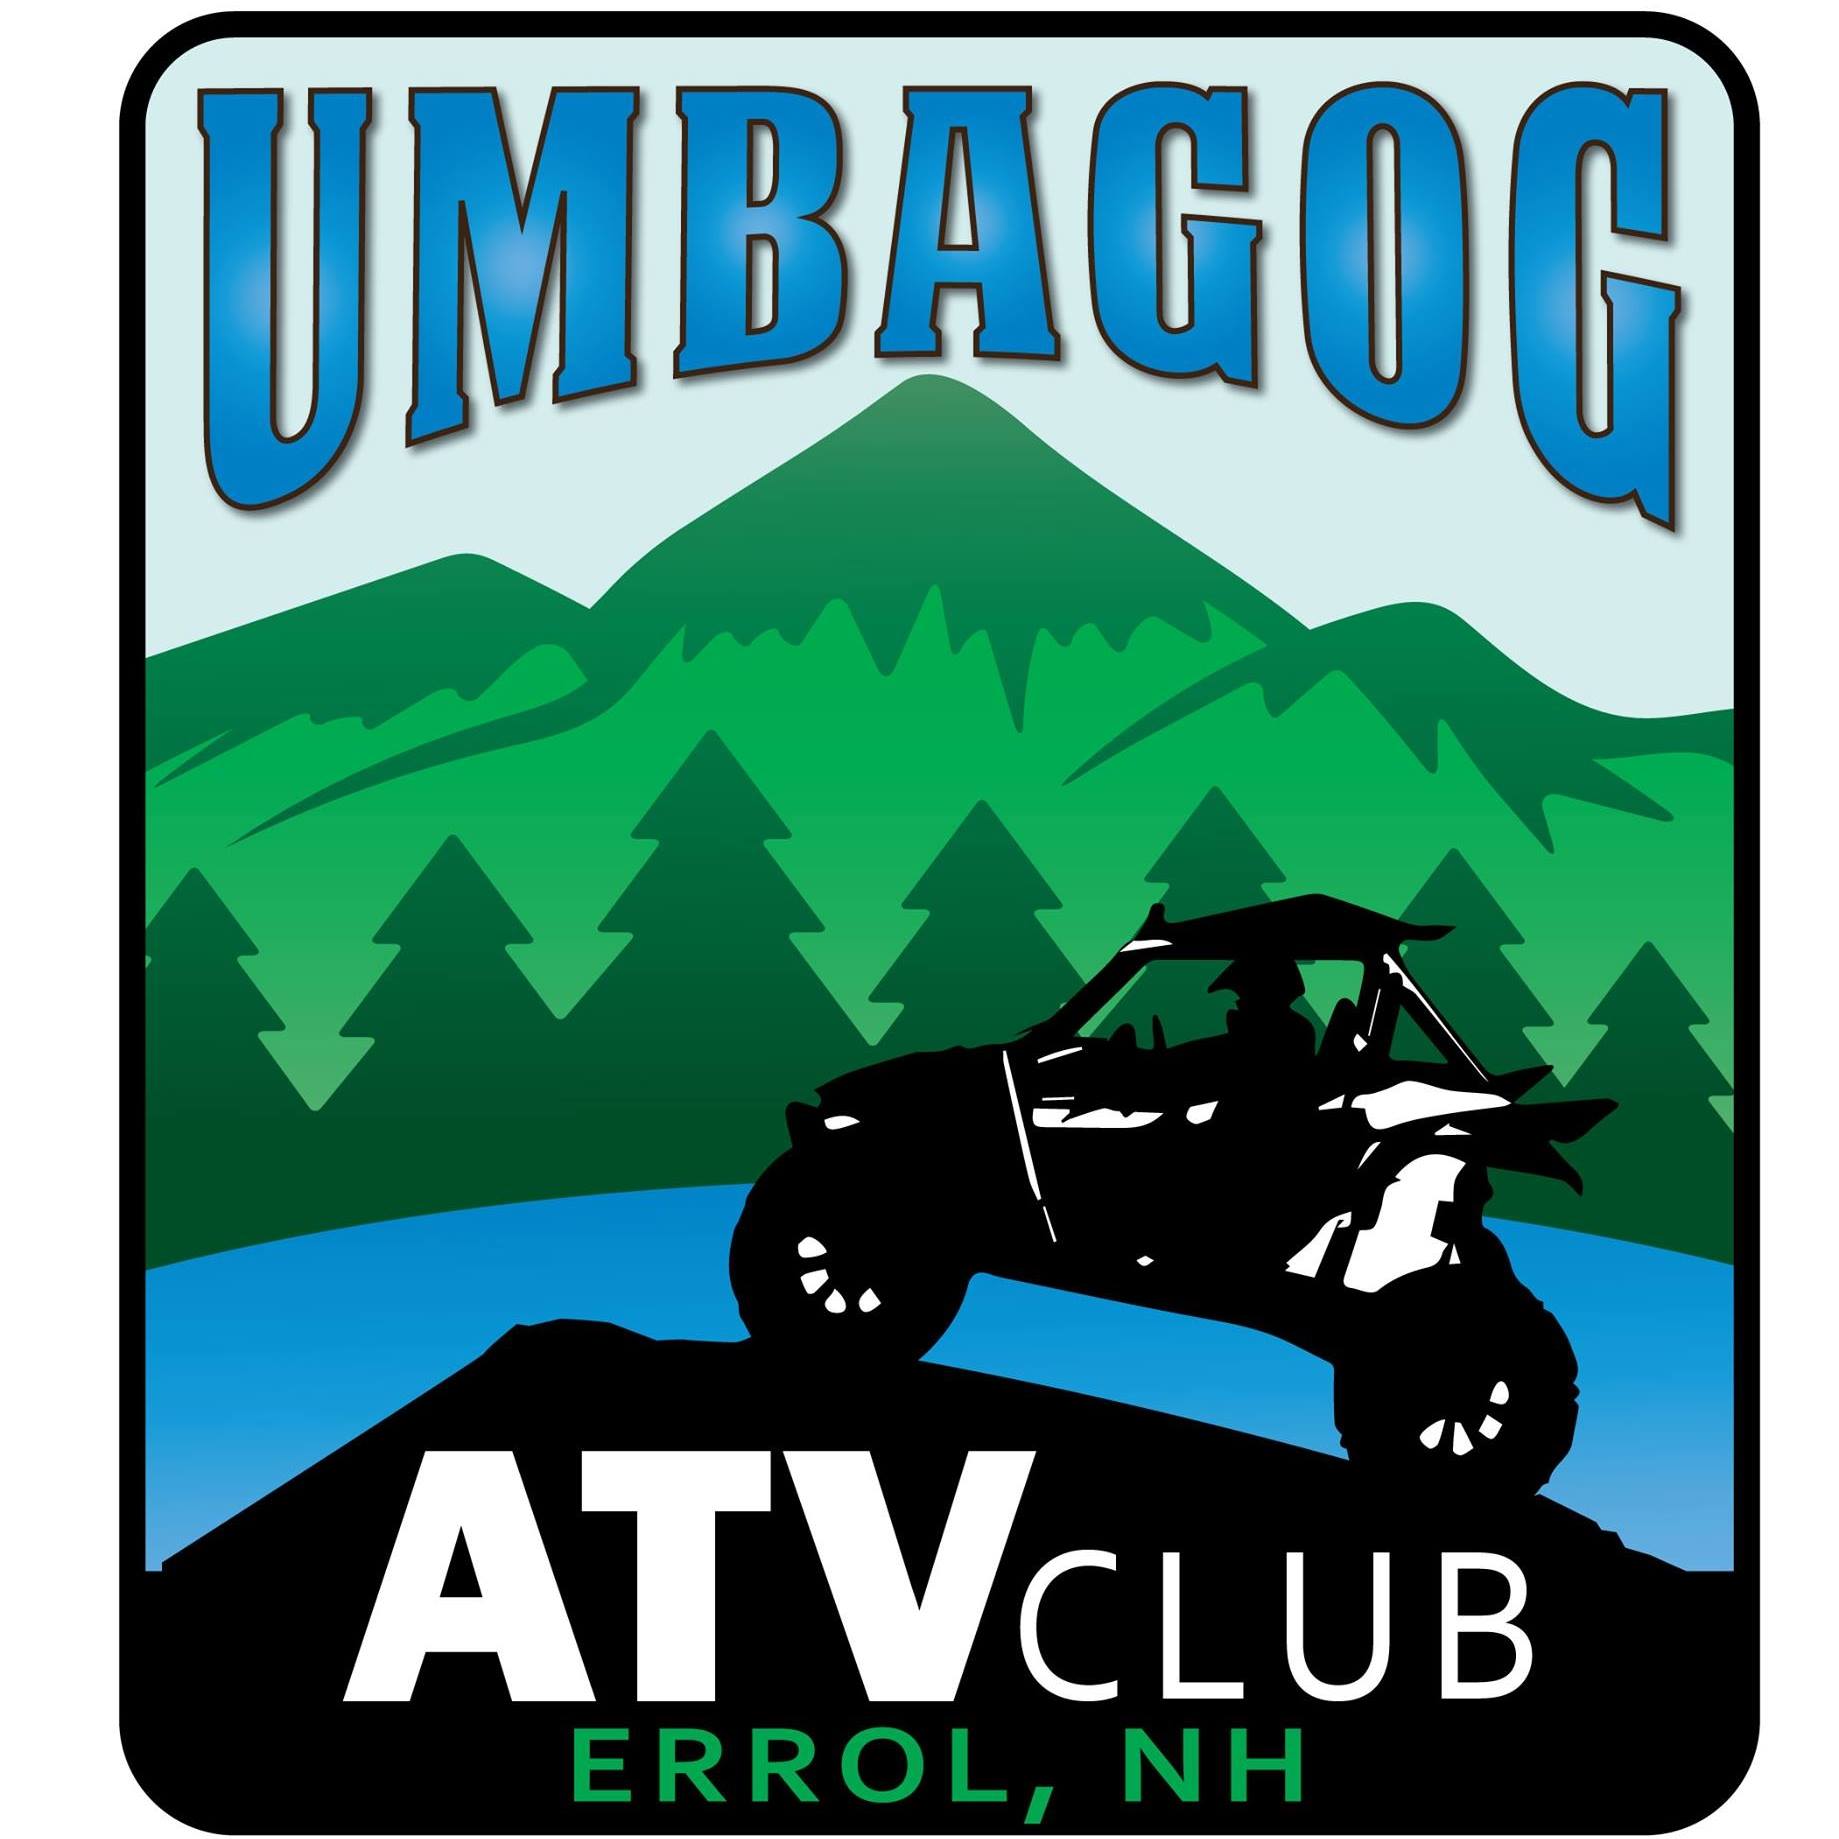 Umbagog ATV Club